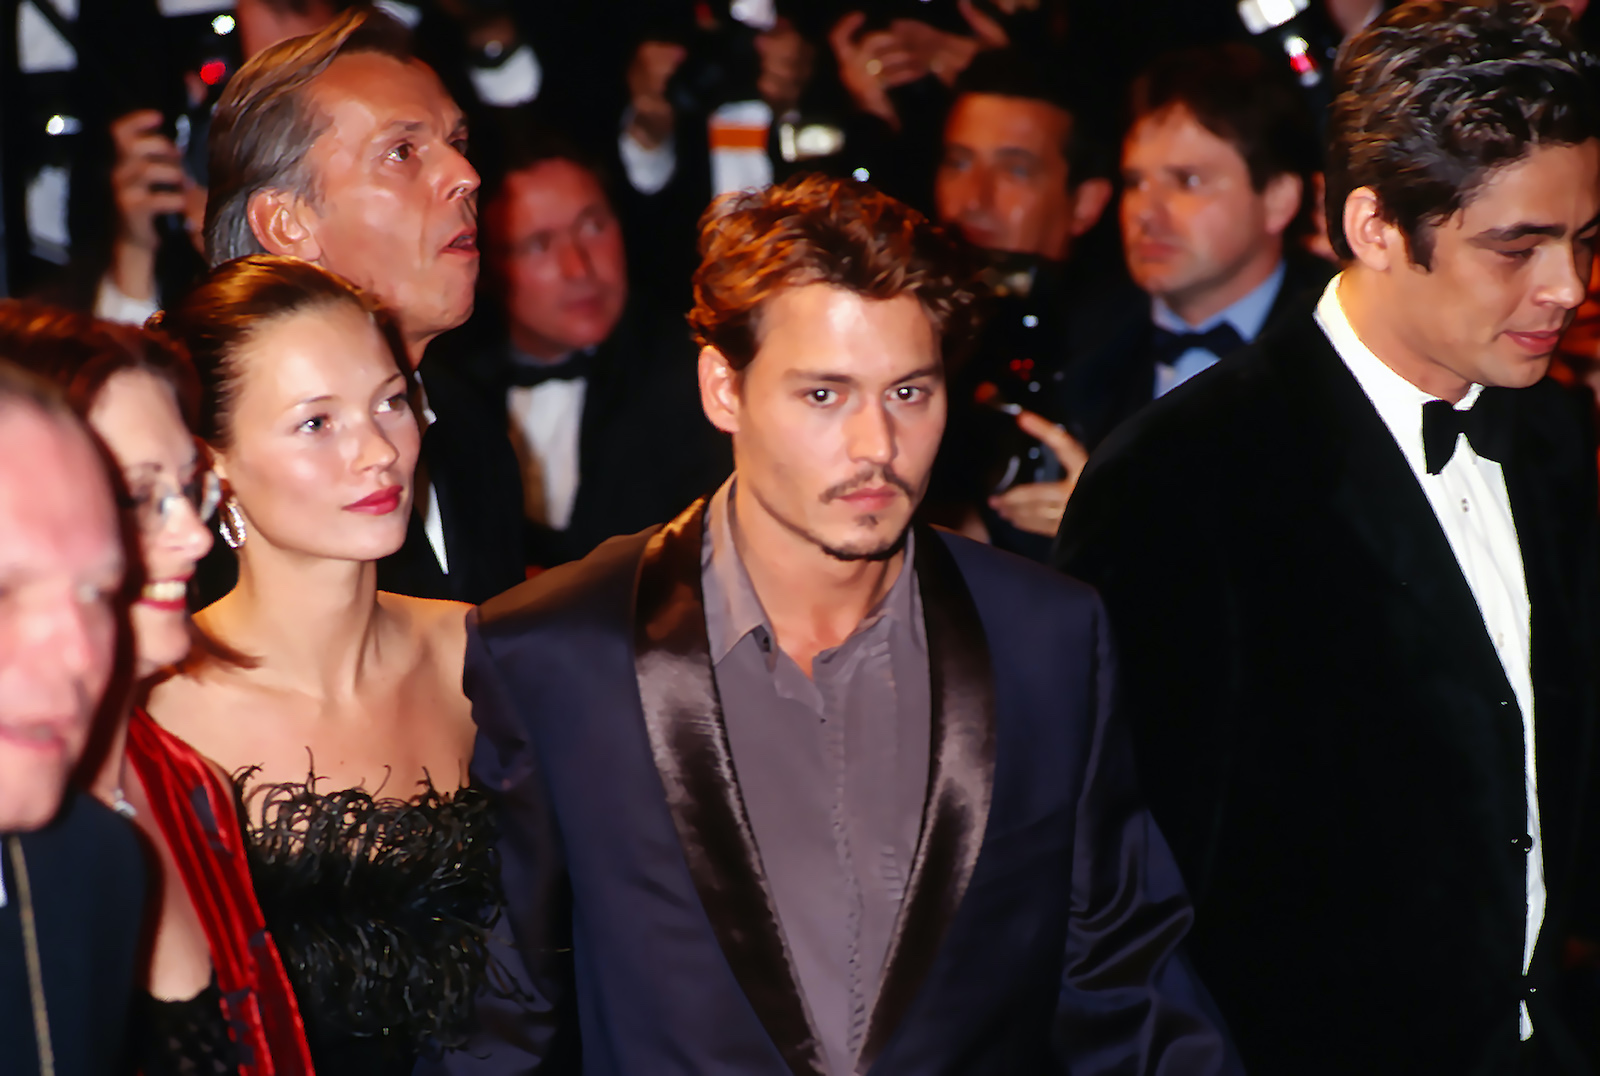 Kate Moss, Johnny Depp, and Benicio Del Toro walk through a crowd in 1998